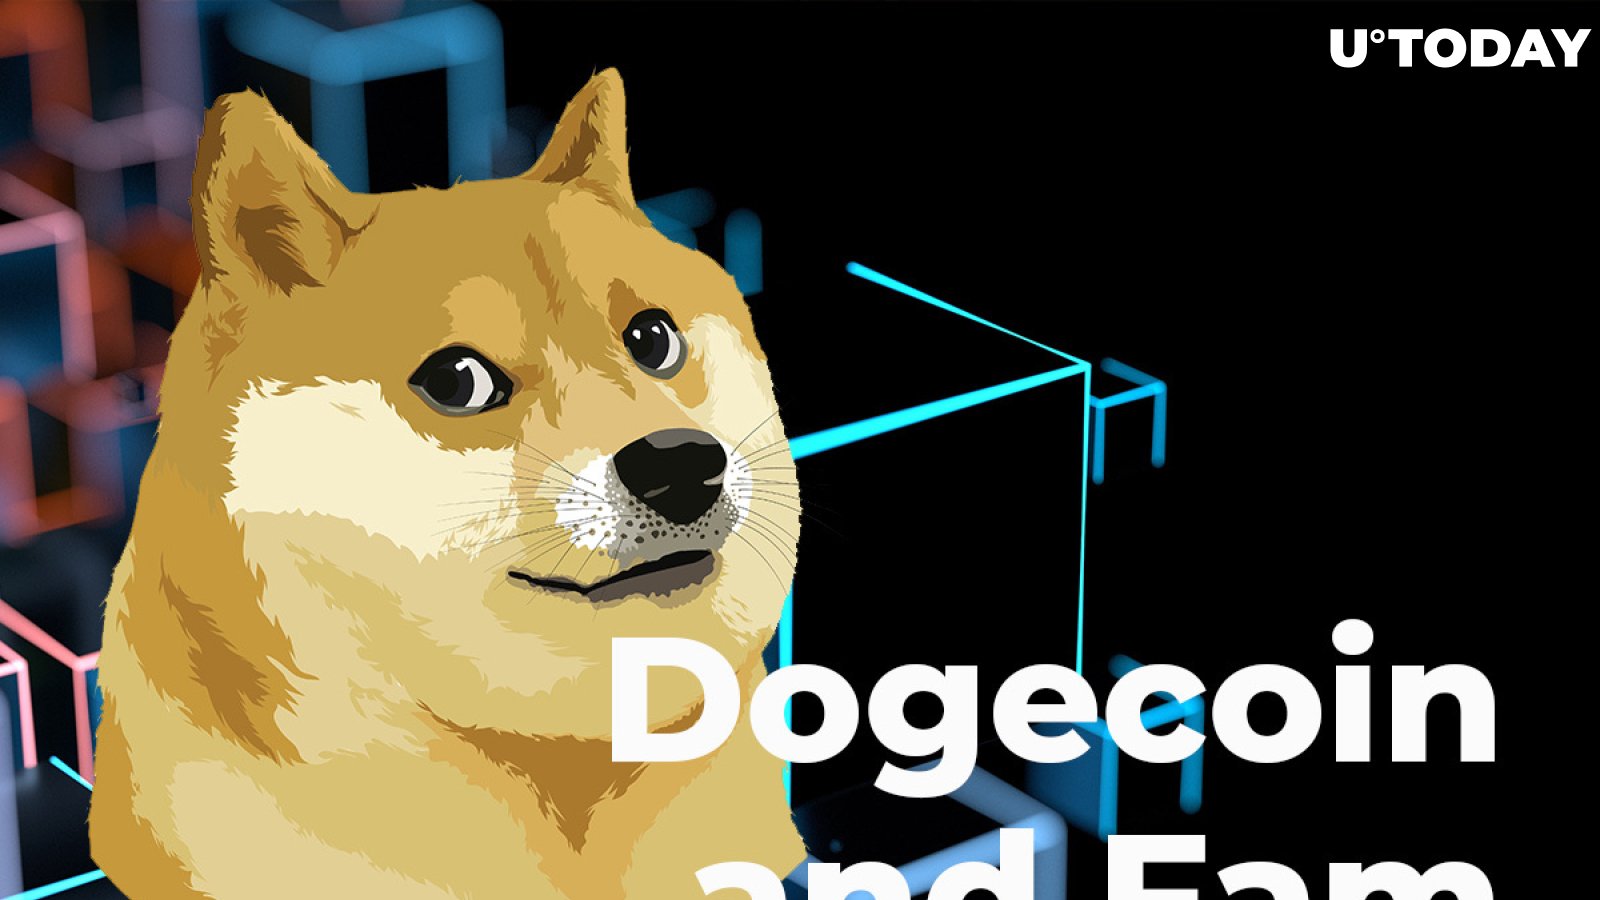 Dogecoin and Fam Back? Reasons Behind DOGE, AKITA, SHIB Pumps